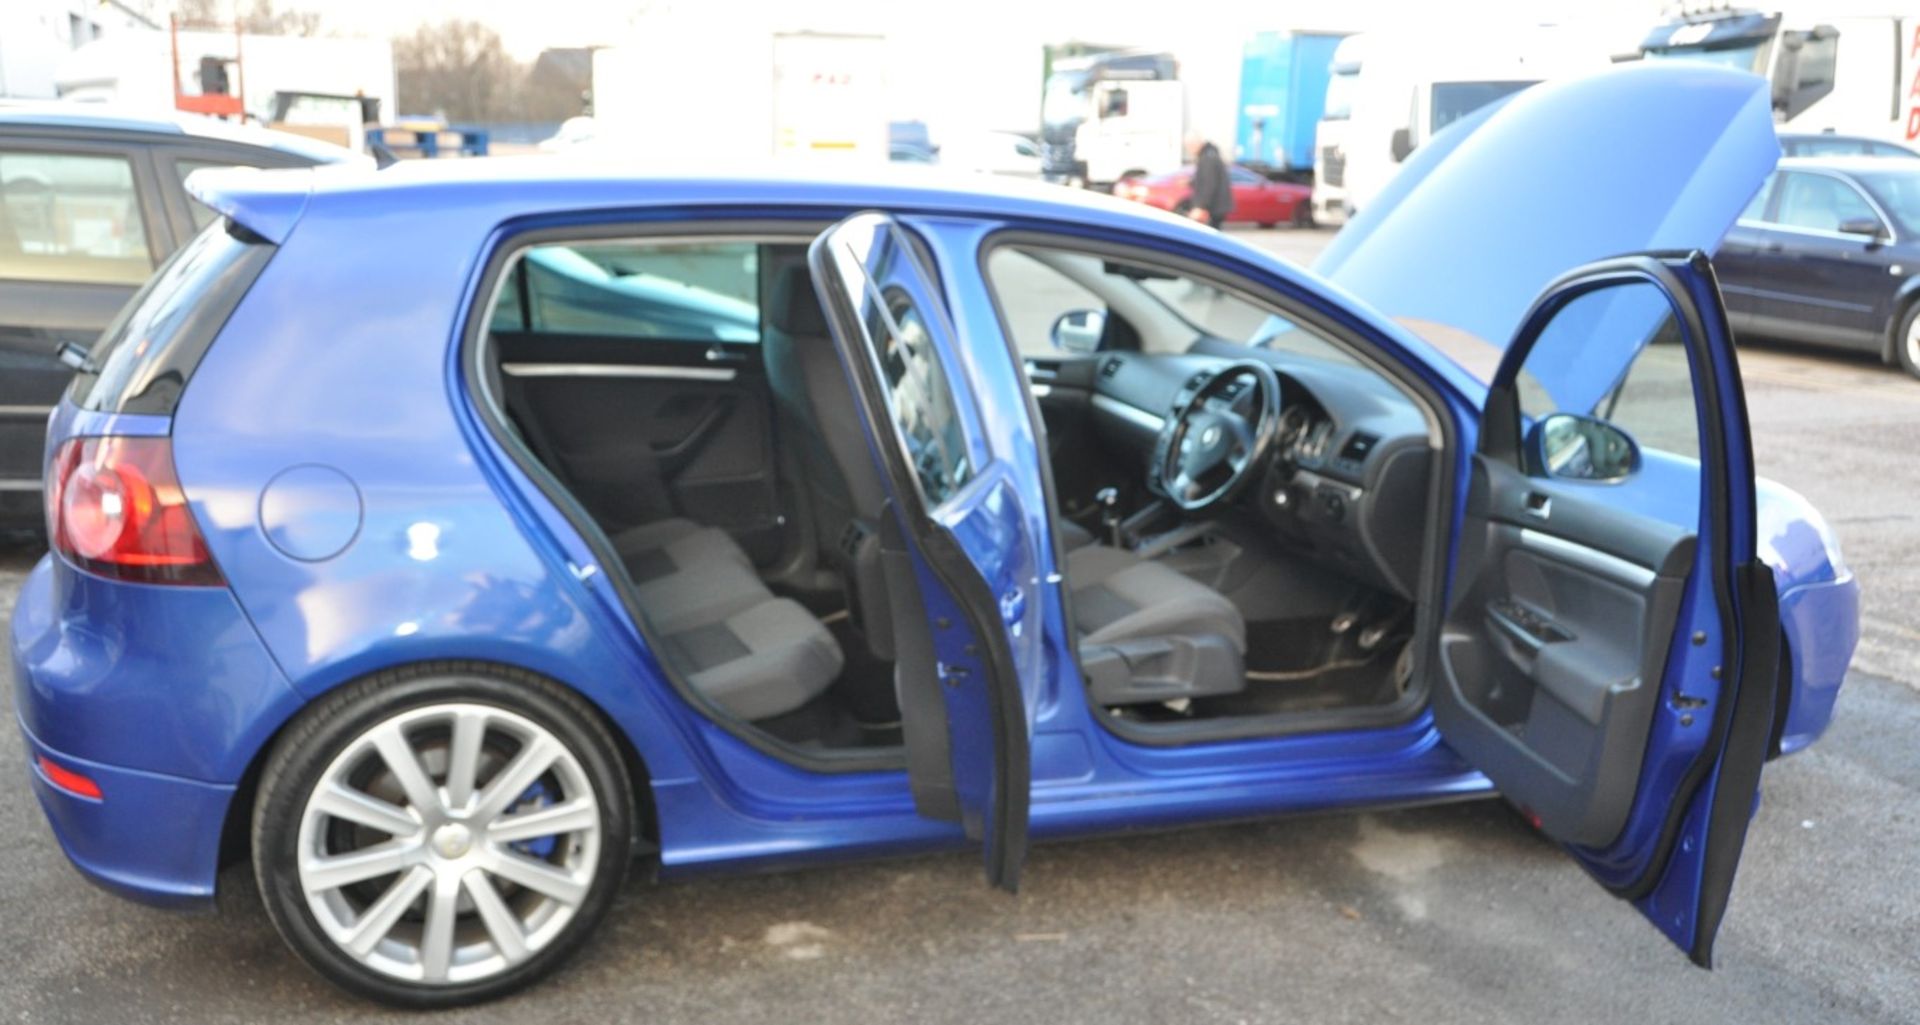 1 x Volkswagon Golf R32 V6 "5 Door" 2008, Blue - Heated Seats, 42,733 Miles - MOT Jan 2016 - Image 16 of 25